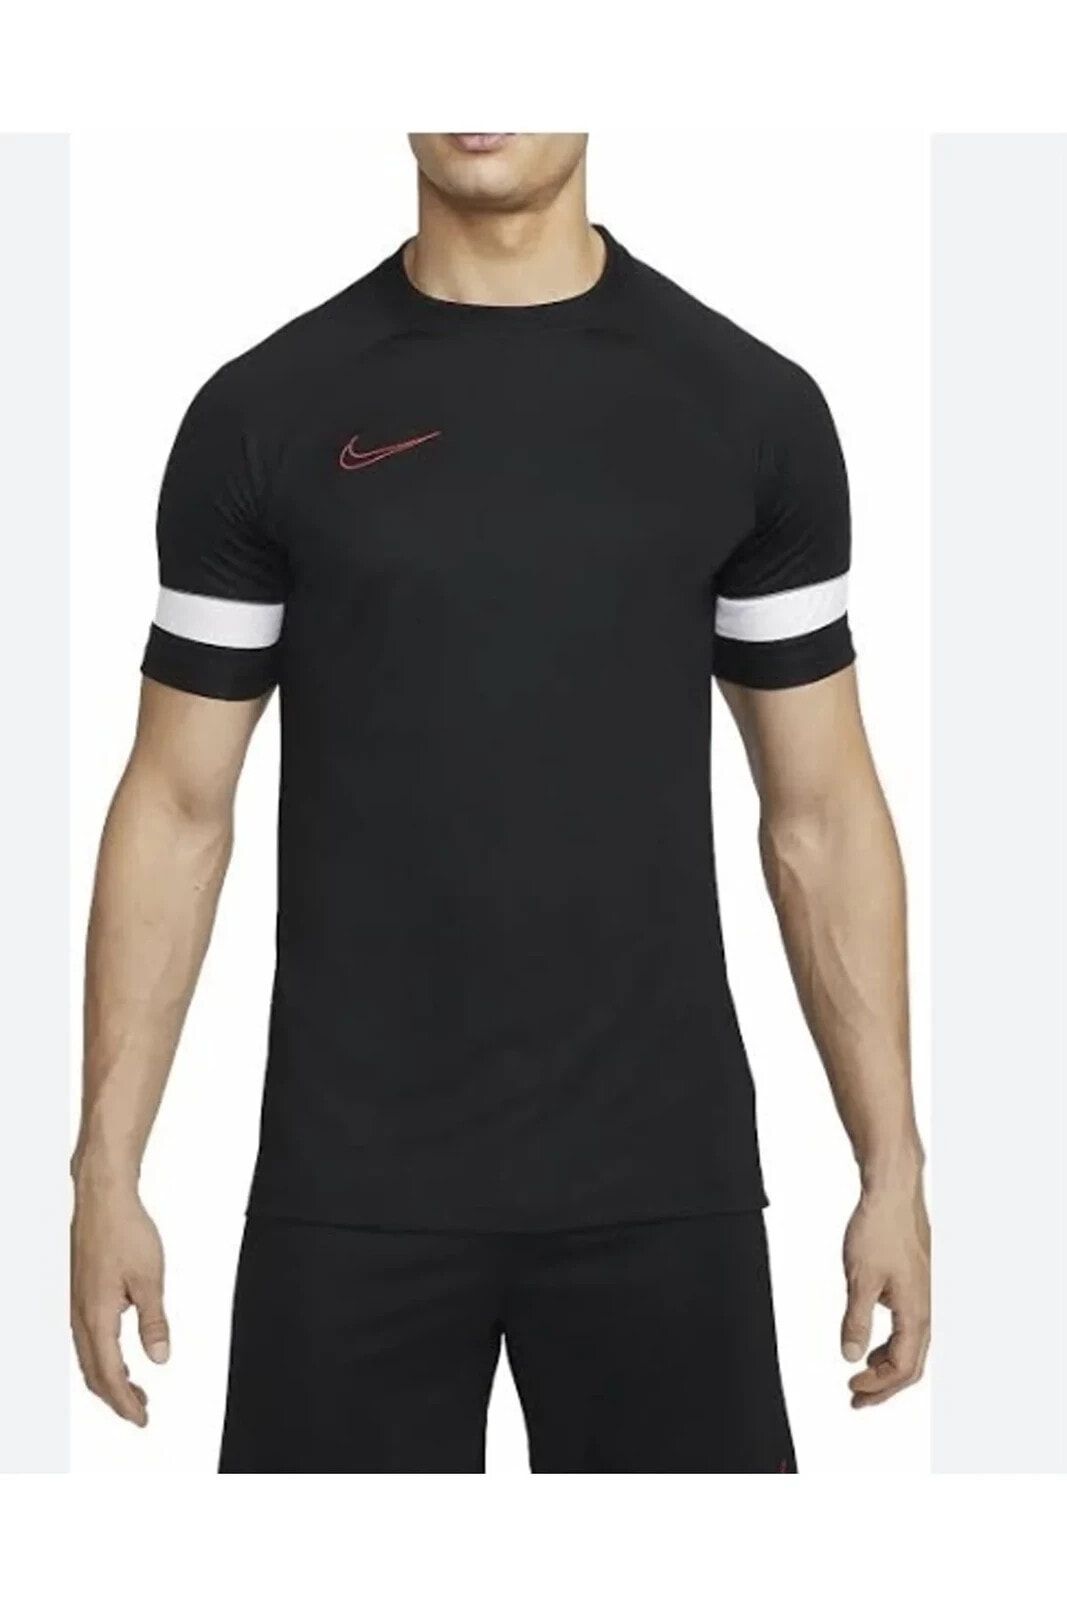 Drı Fıt Academy T-shirt Cw6101-013 Erkek Siyah Tshirt